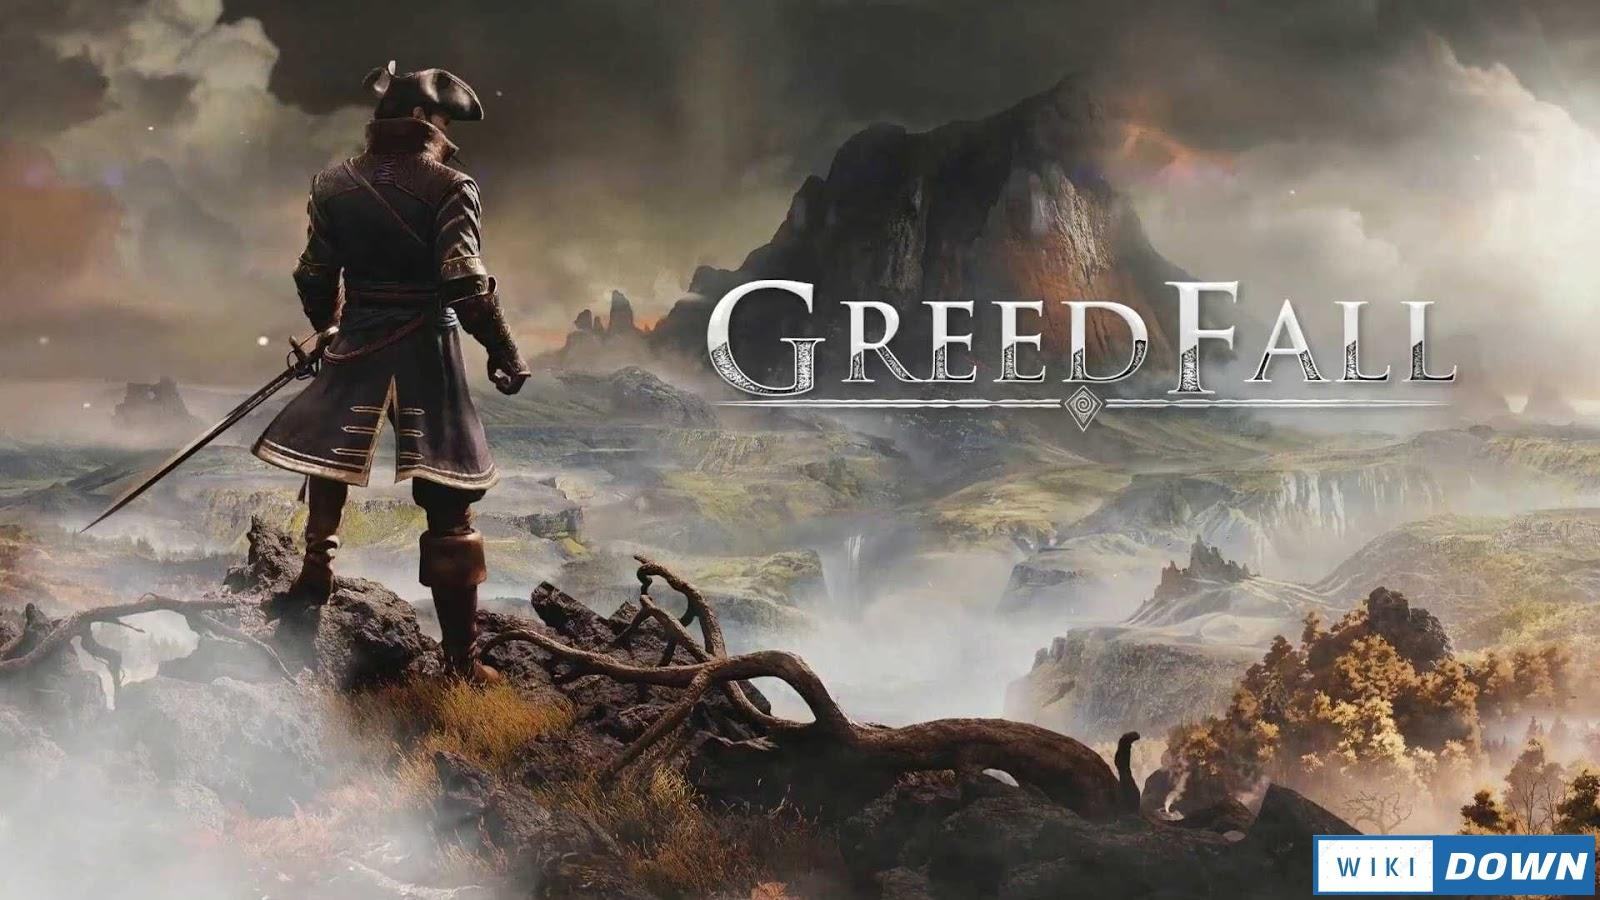 Download GreedFall Adventurer’s Gear Mới Nhất